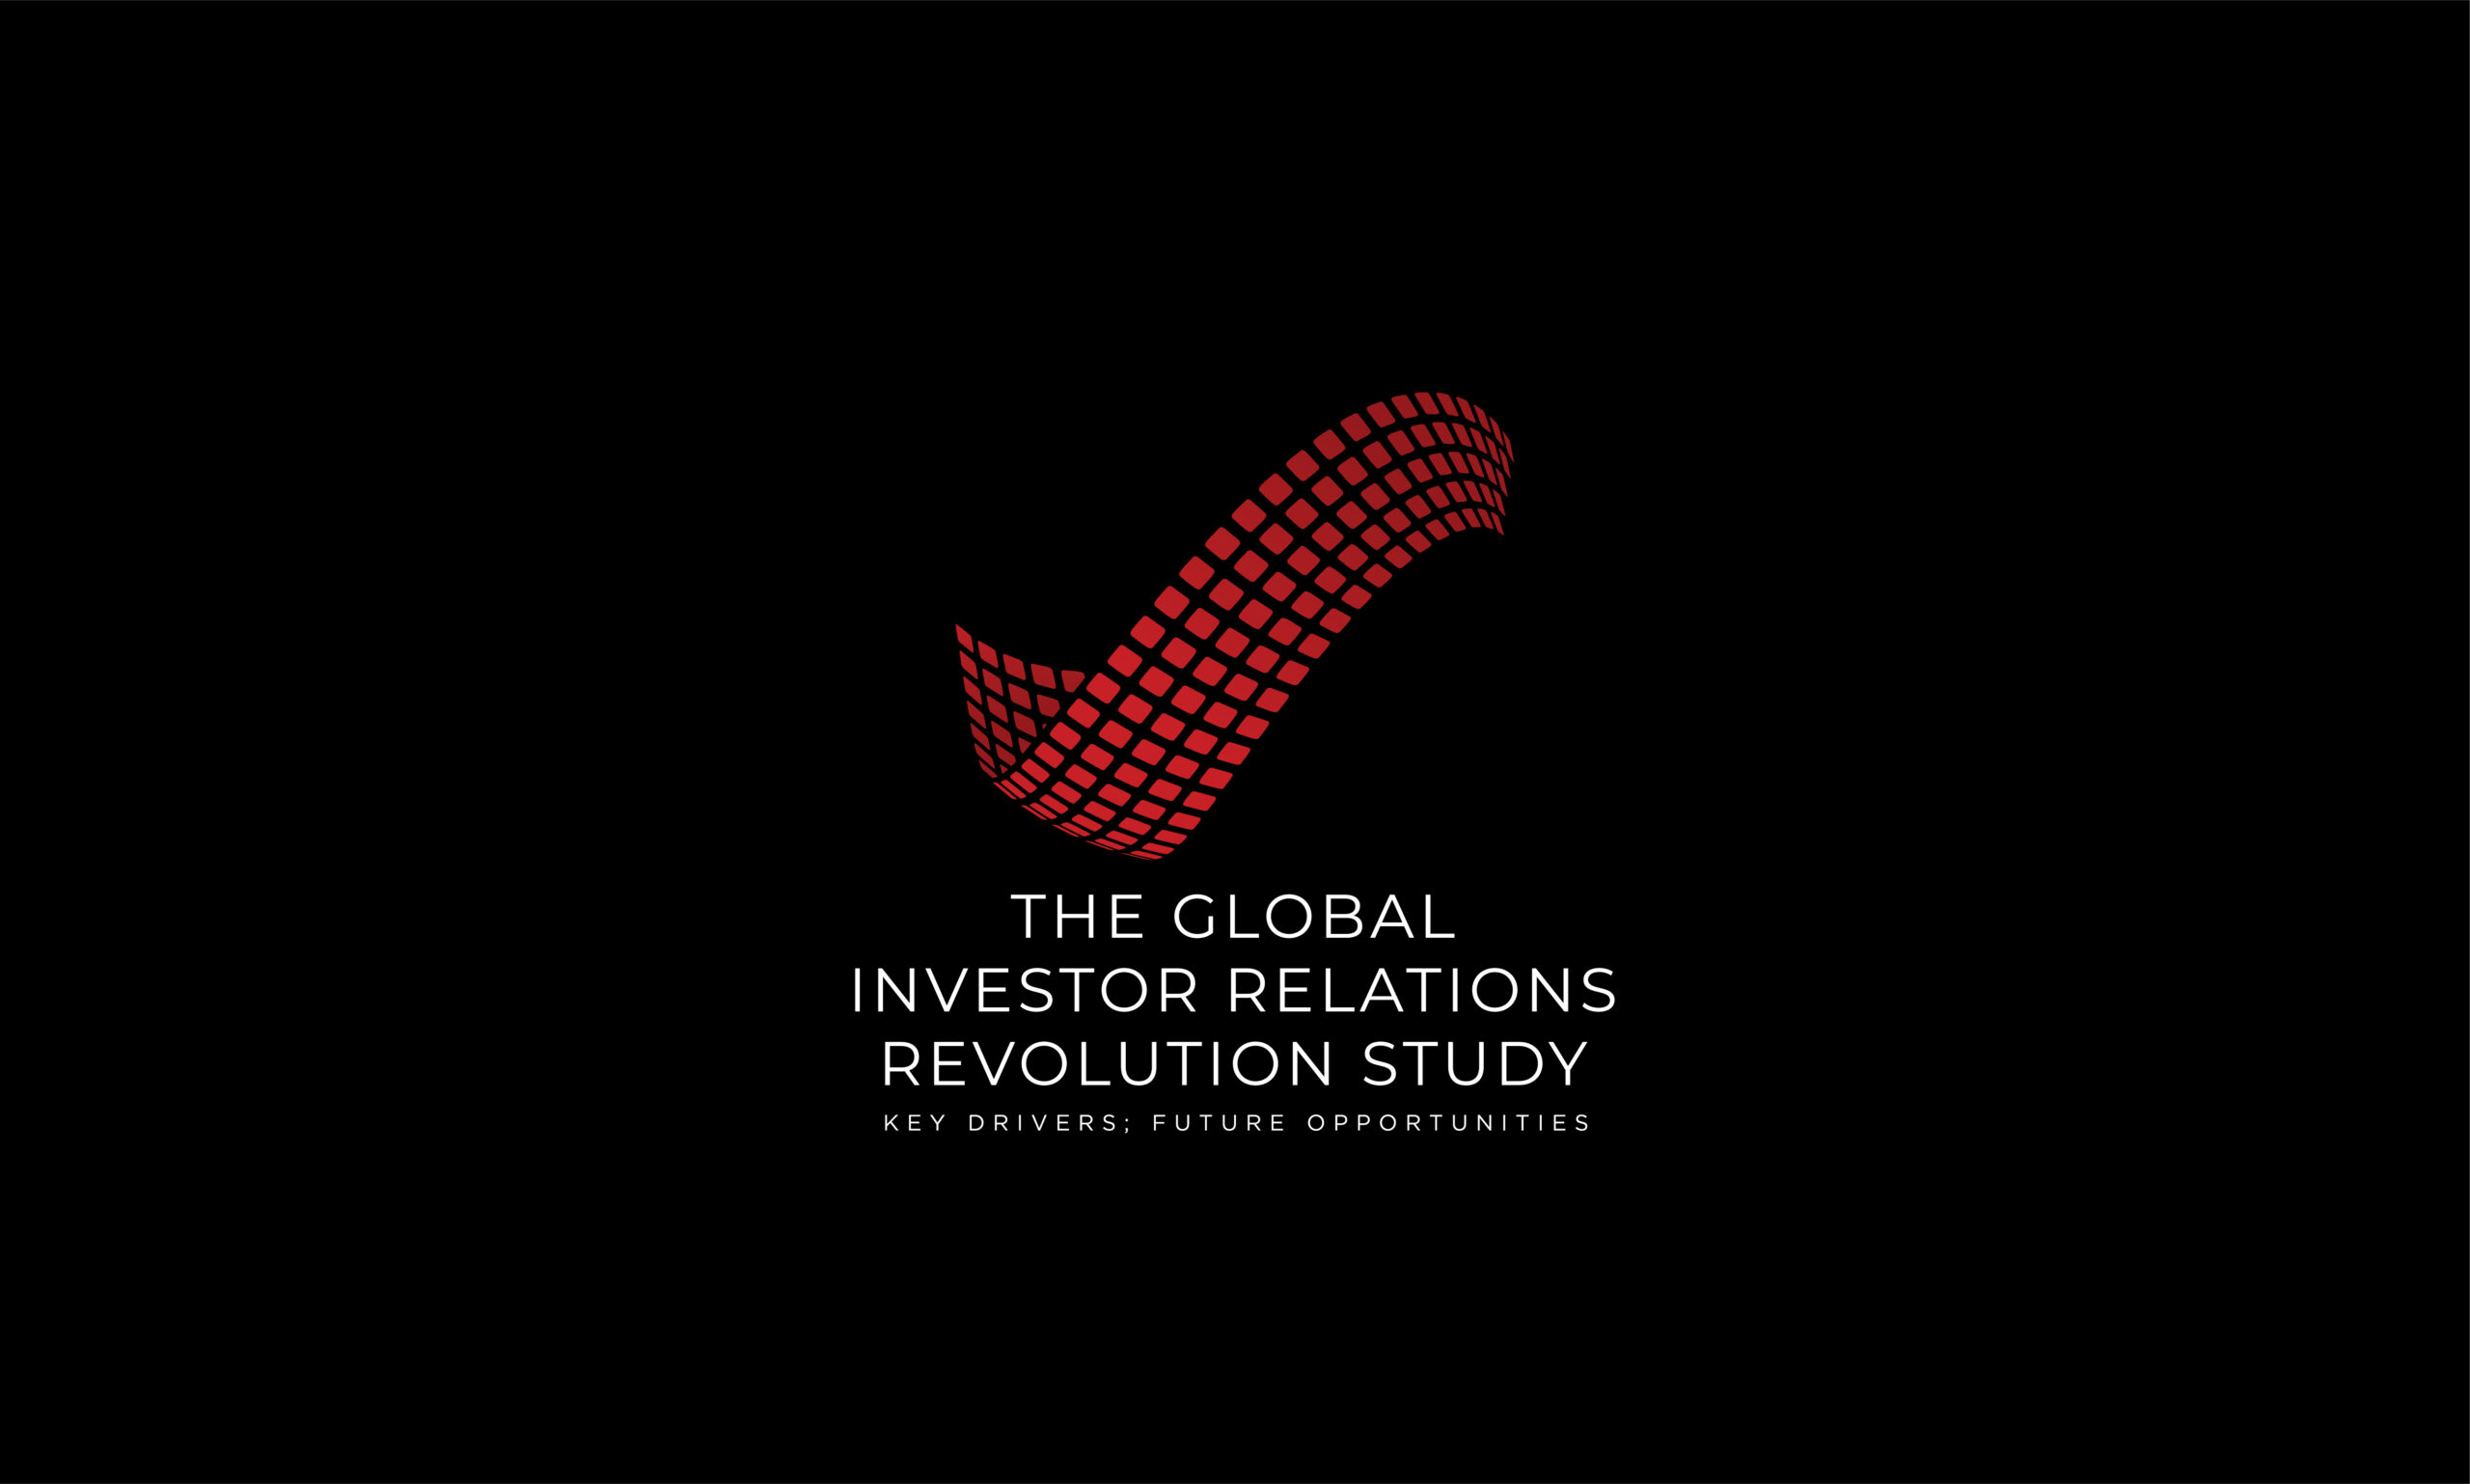 The Global Investor Relations Revolution